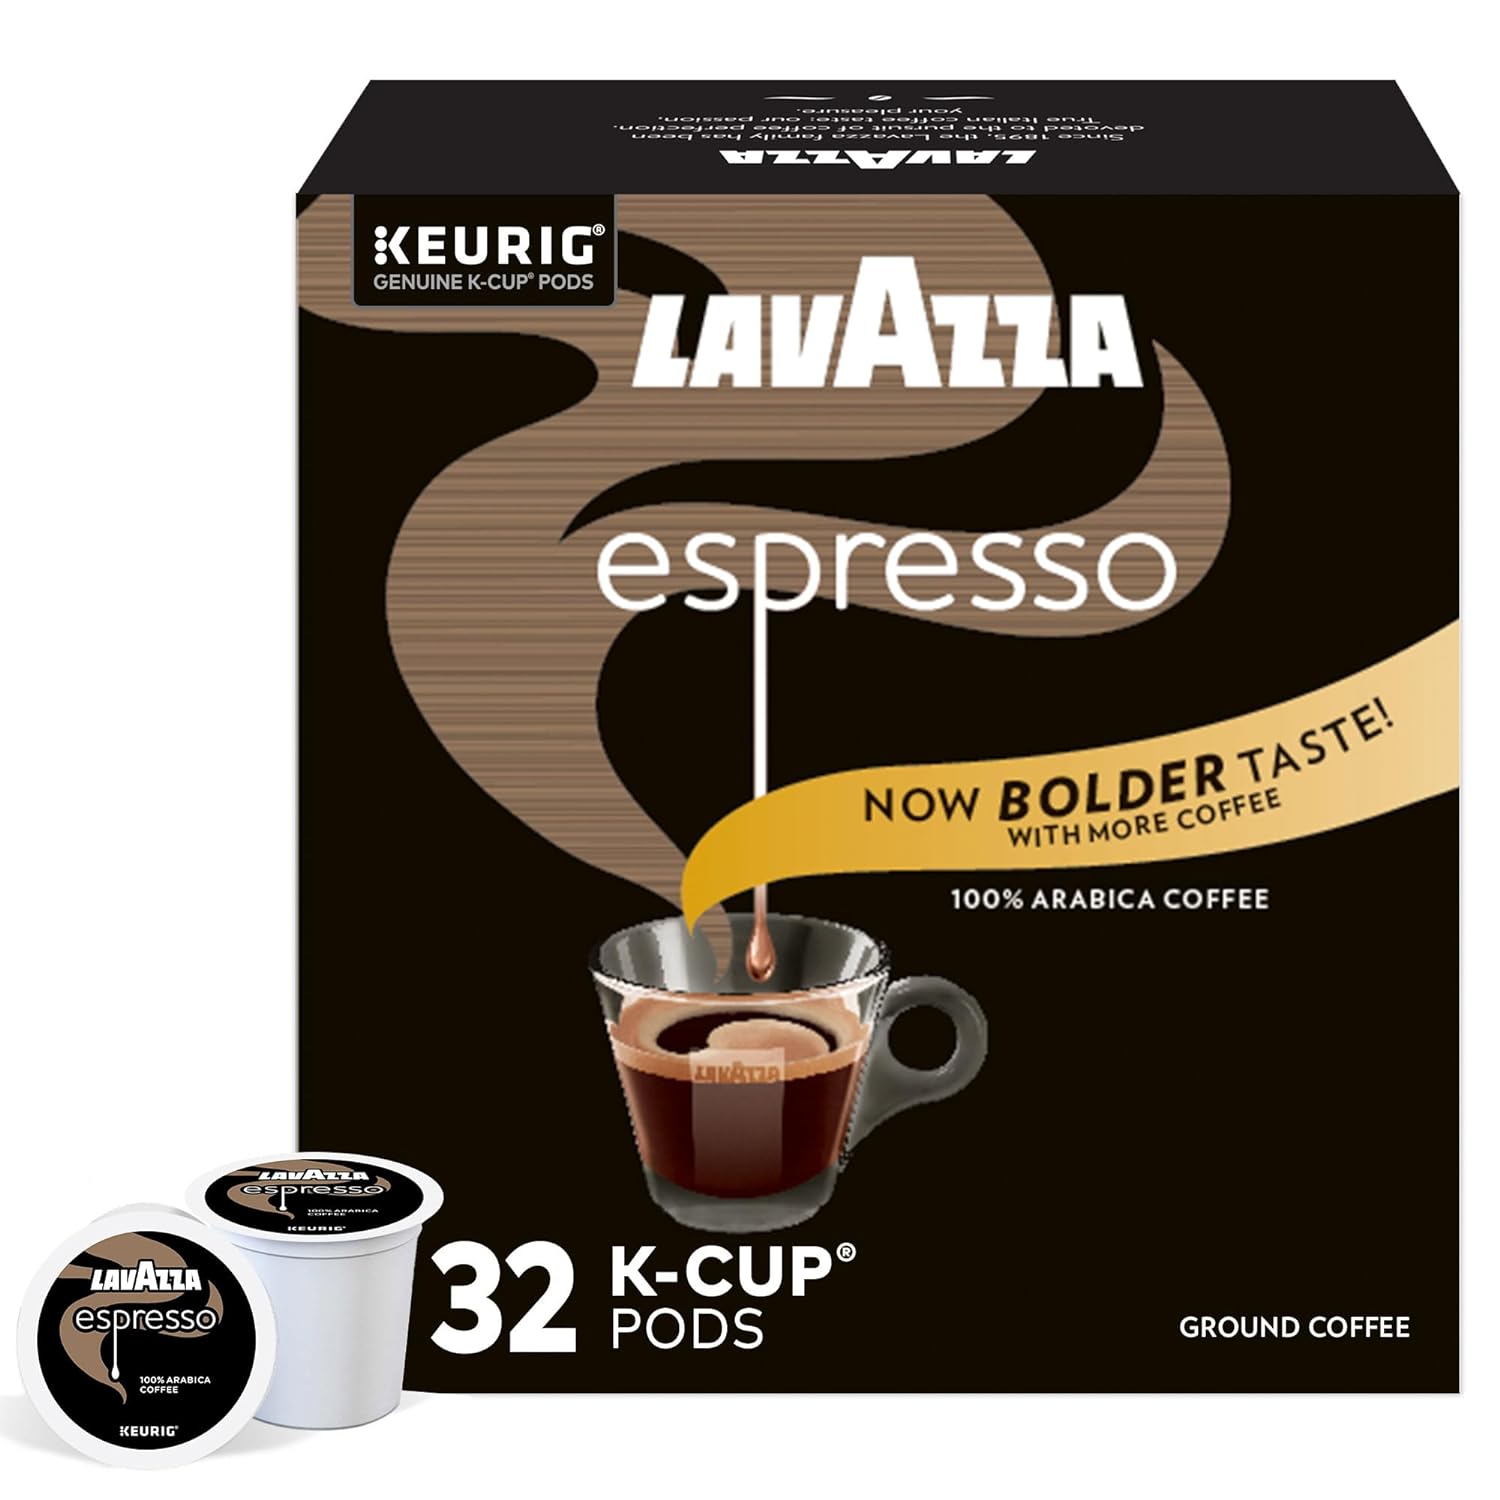 Lavazza Espresso Single-Serve Coffee K-Cups for Keurig Brewer, 32 Count